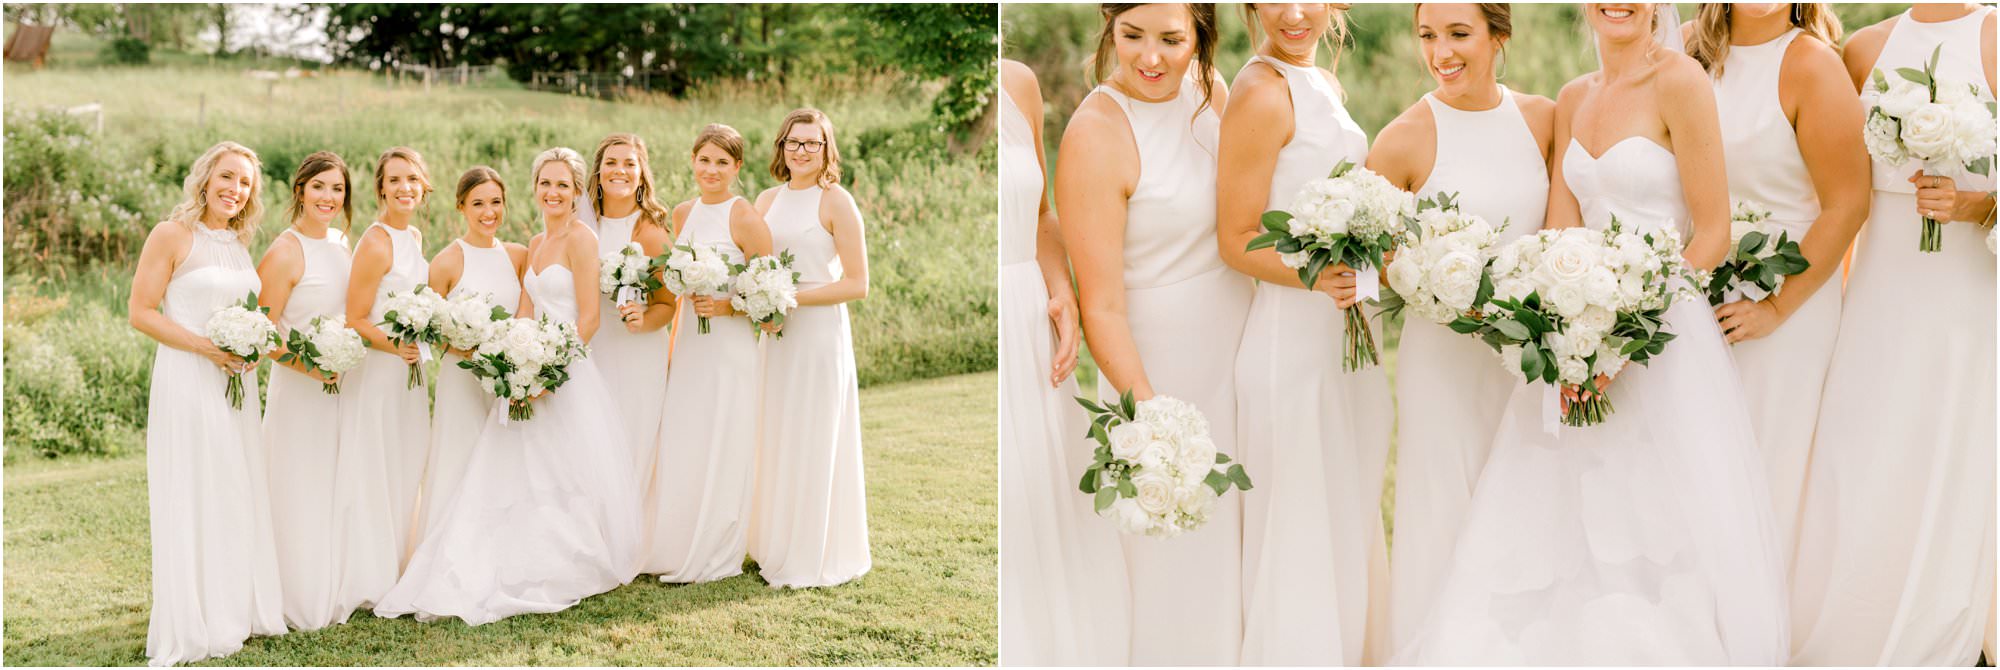 neutral summer south farms wedding connecticut white bridesmaid dresses